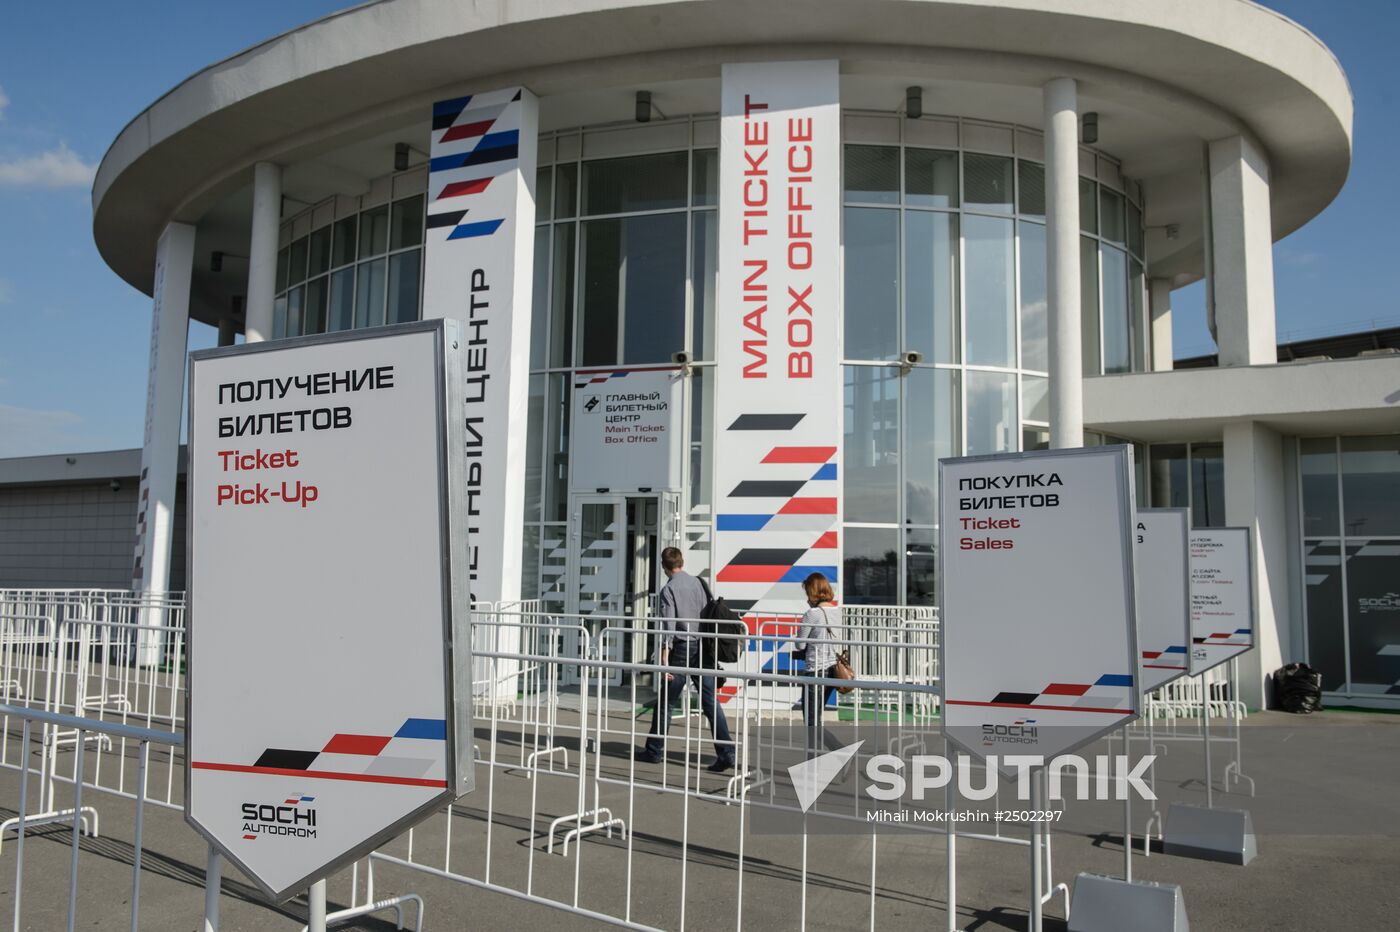 Preparations for the Russian Grand Prix Formula 1